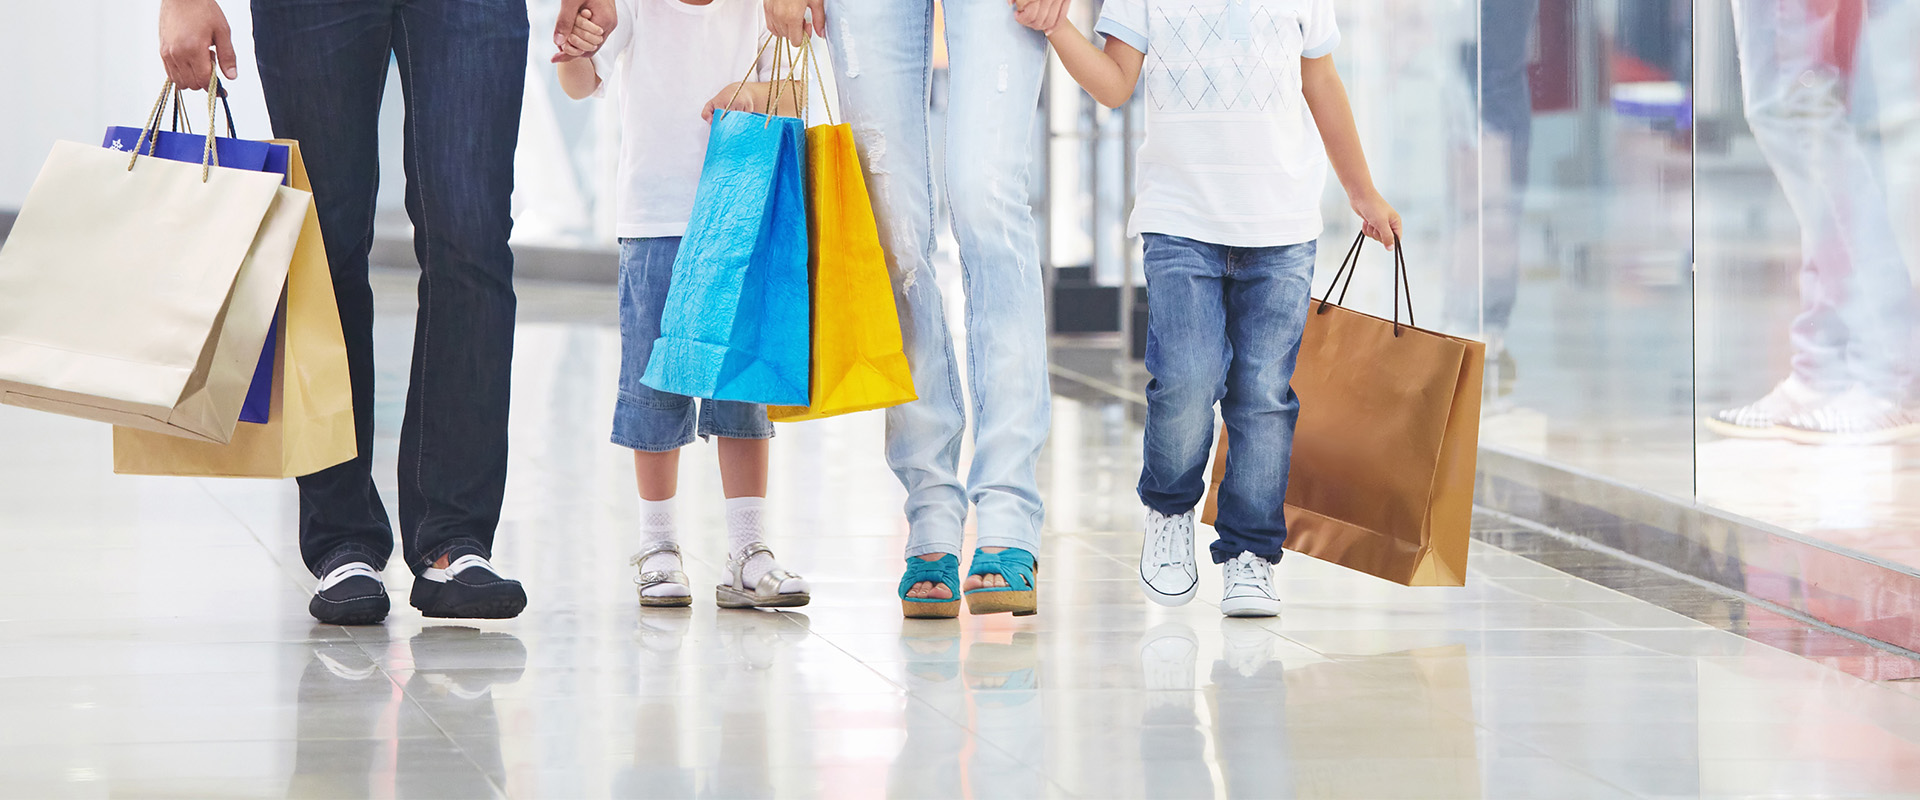 Families expect a fun customer experience when shopping